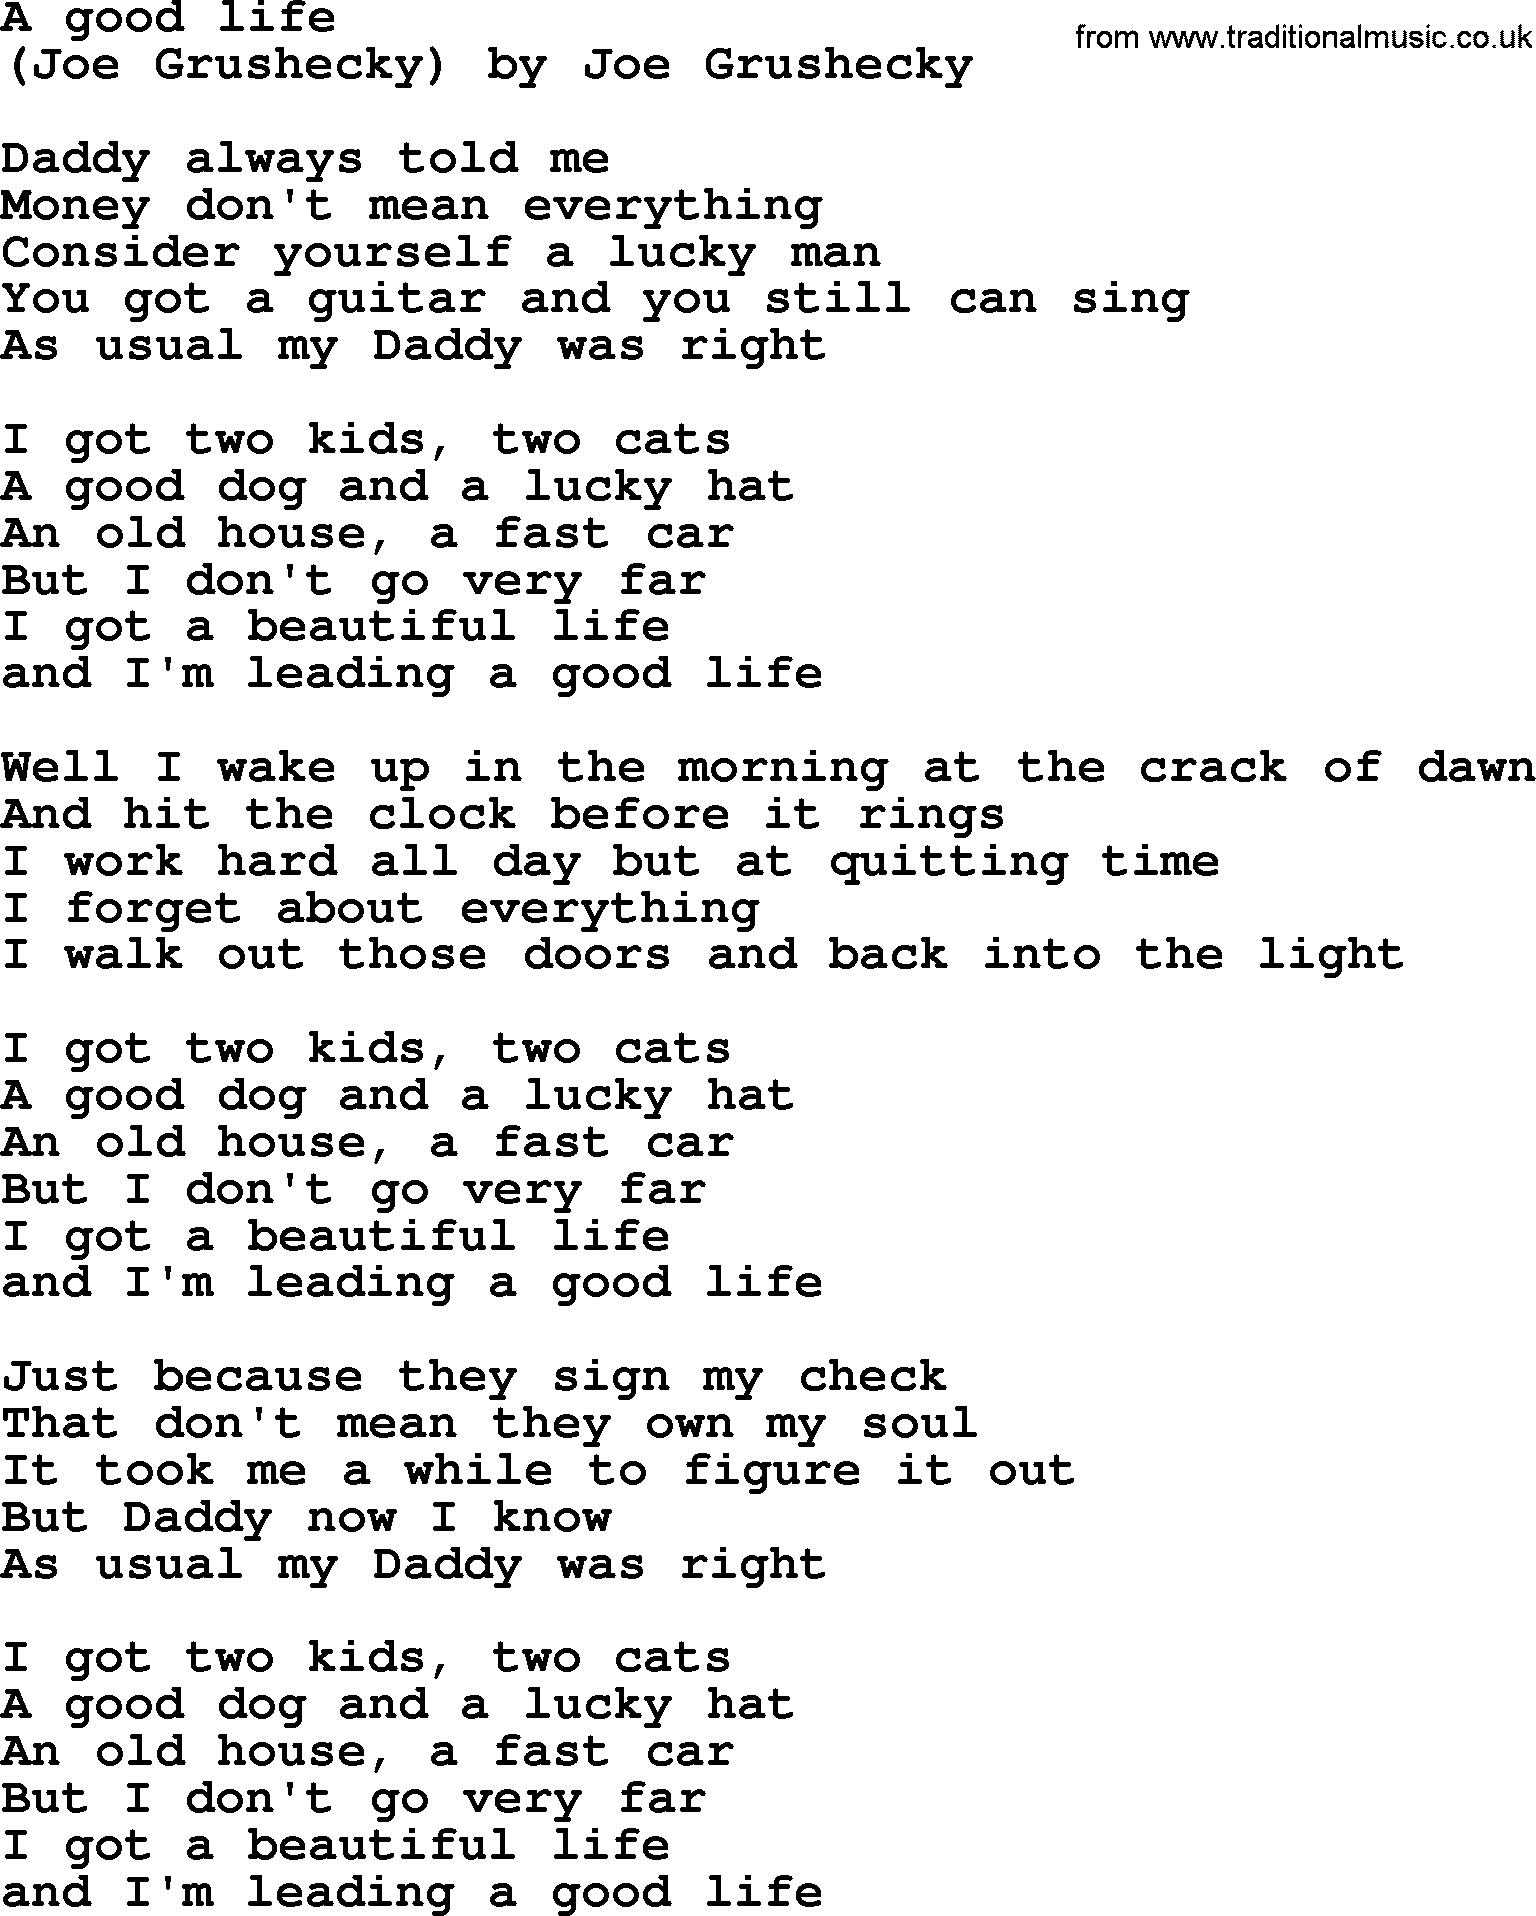 Bruce Springsteen song: A Good Life lyrics